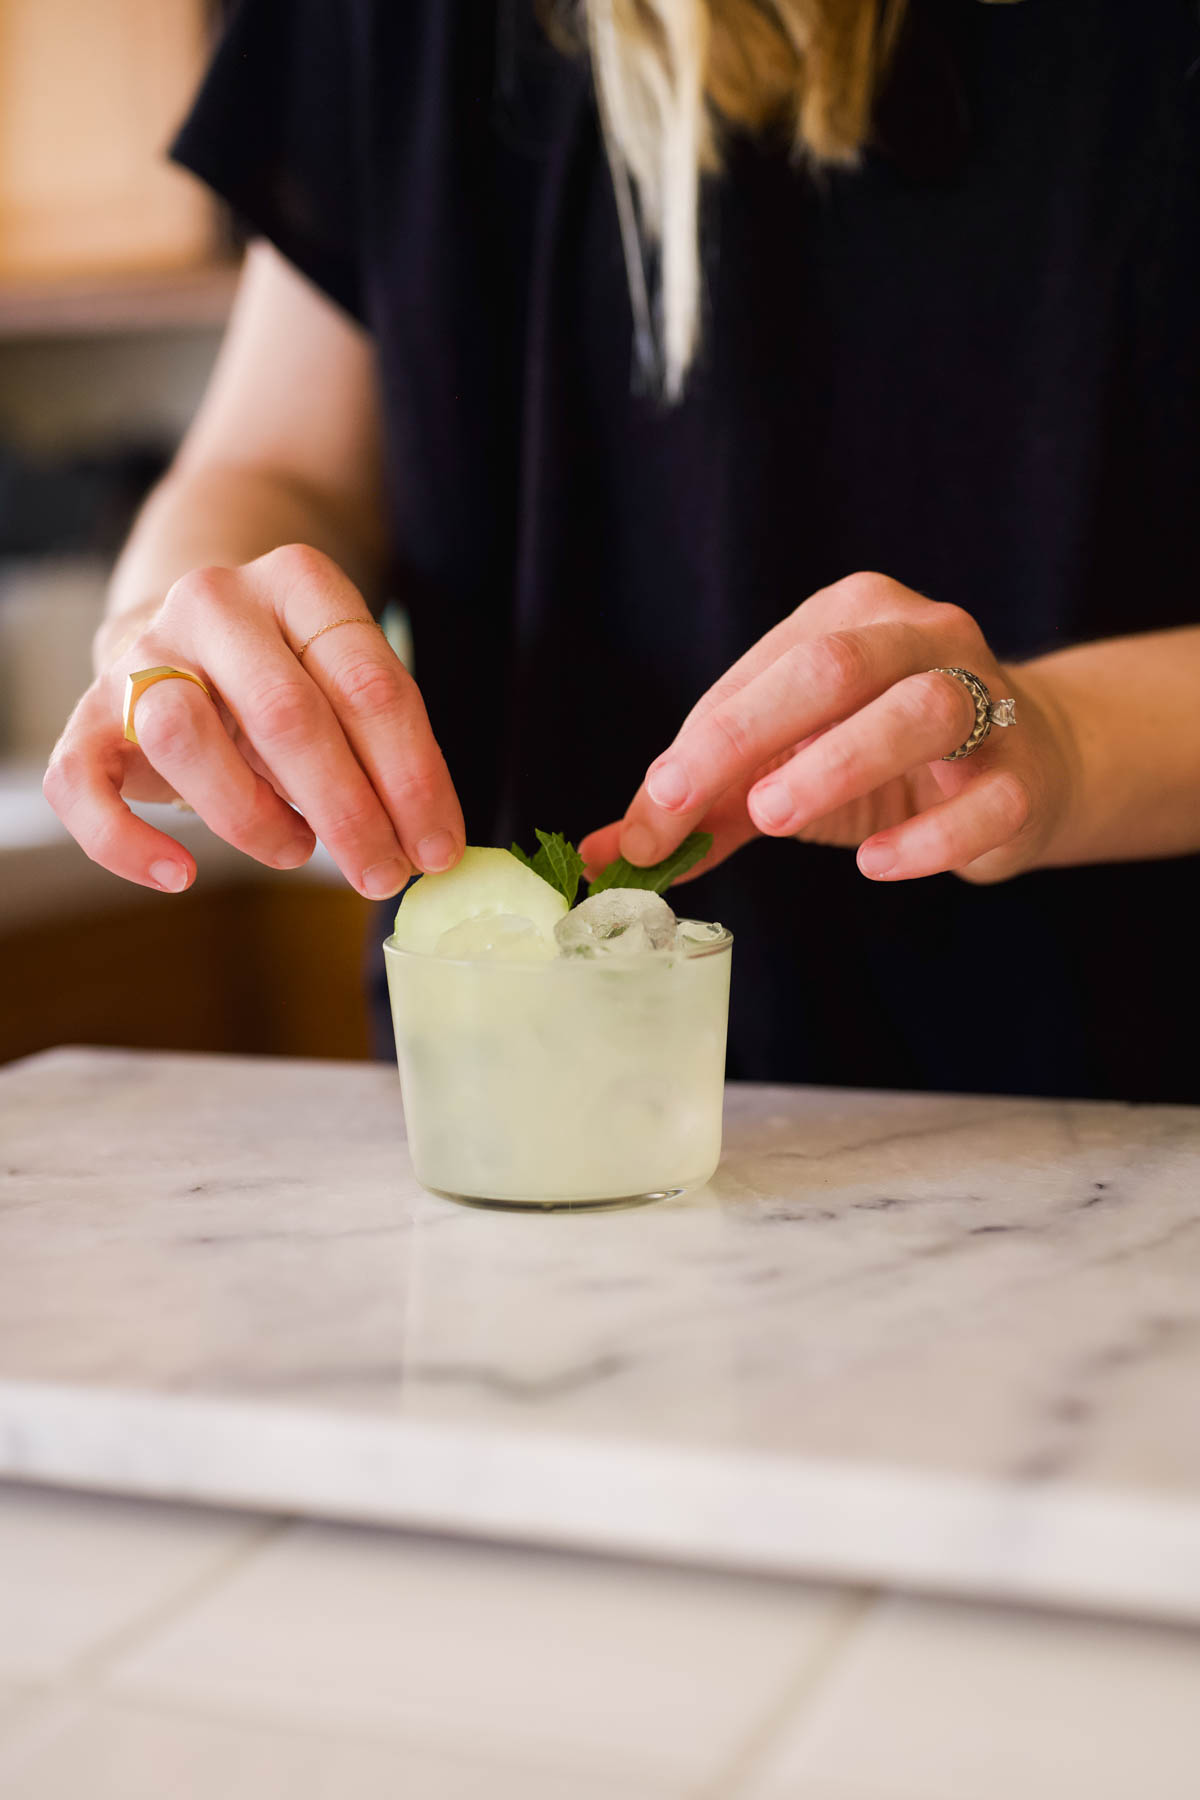 Woman adding a cucumber garnish to a short cocktail glass.